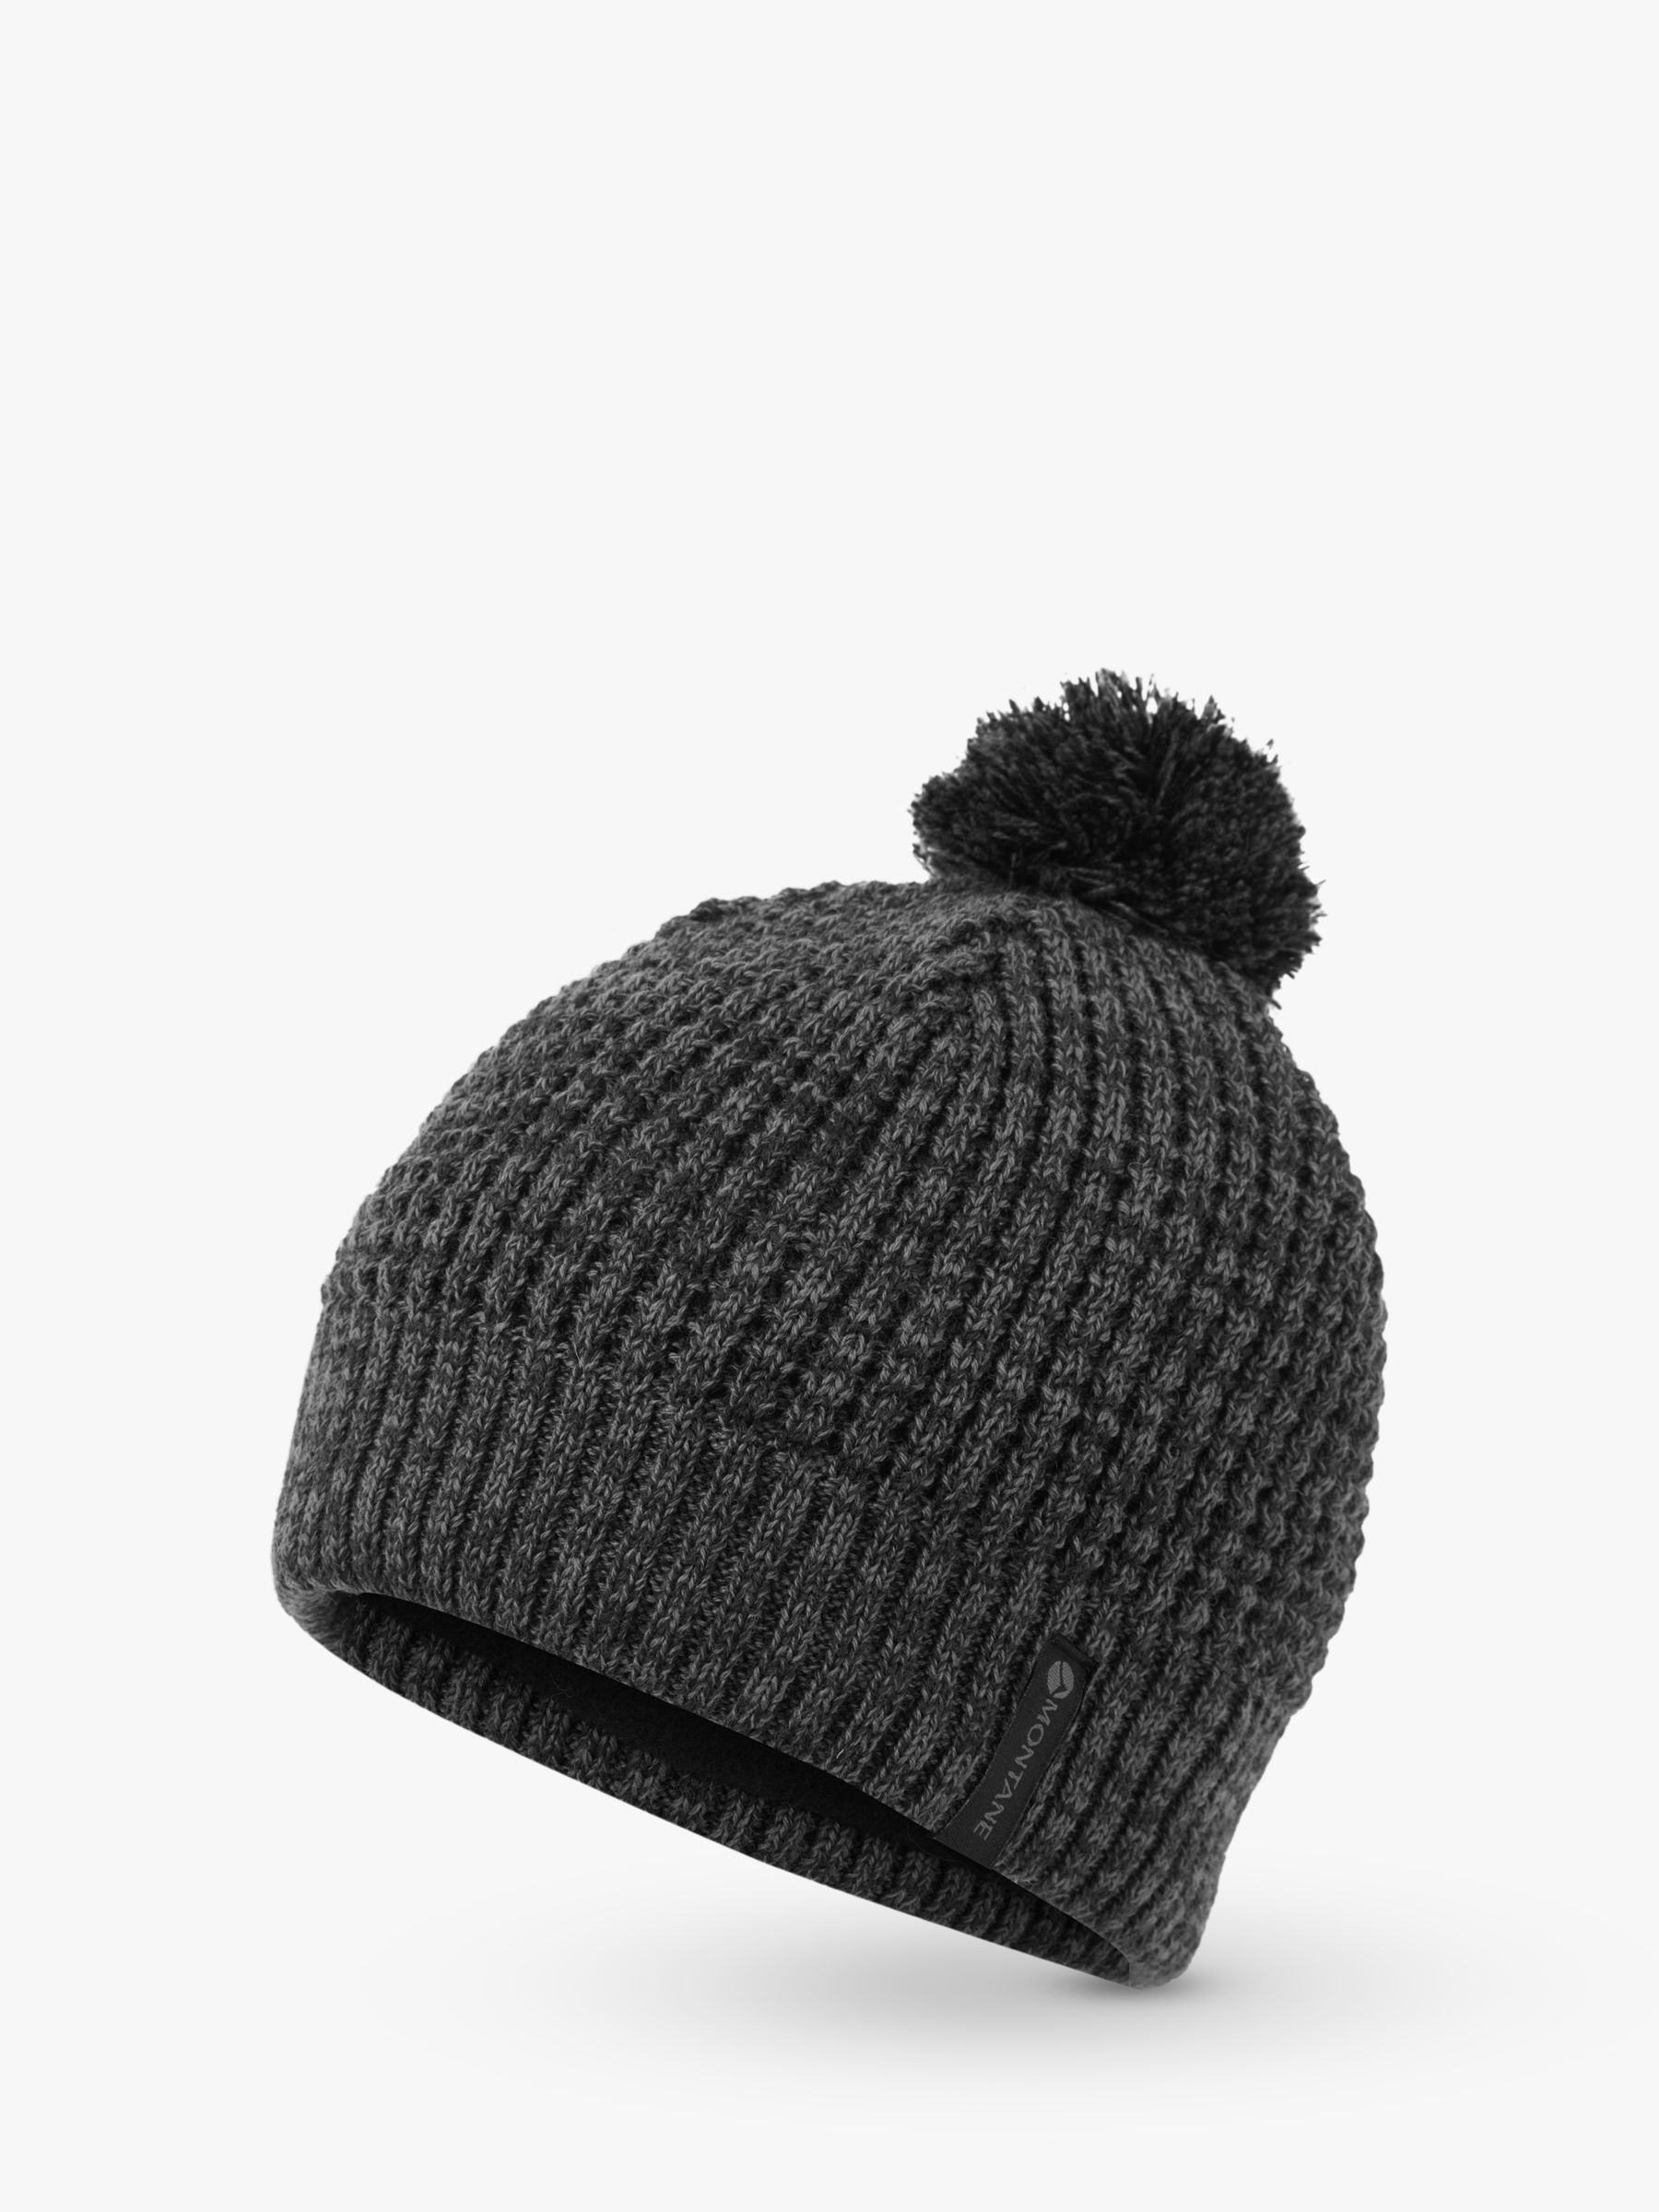 Montane Pip Merino Wool Blend Bobble Hat, Black, One Size